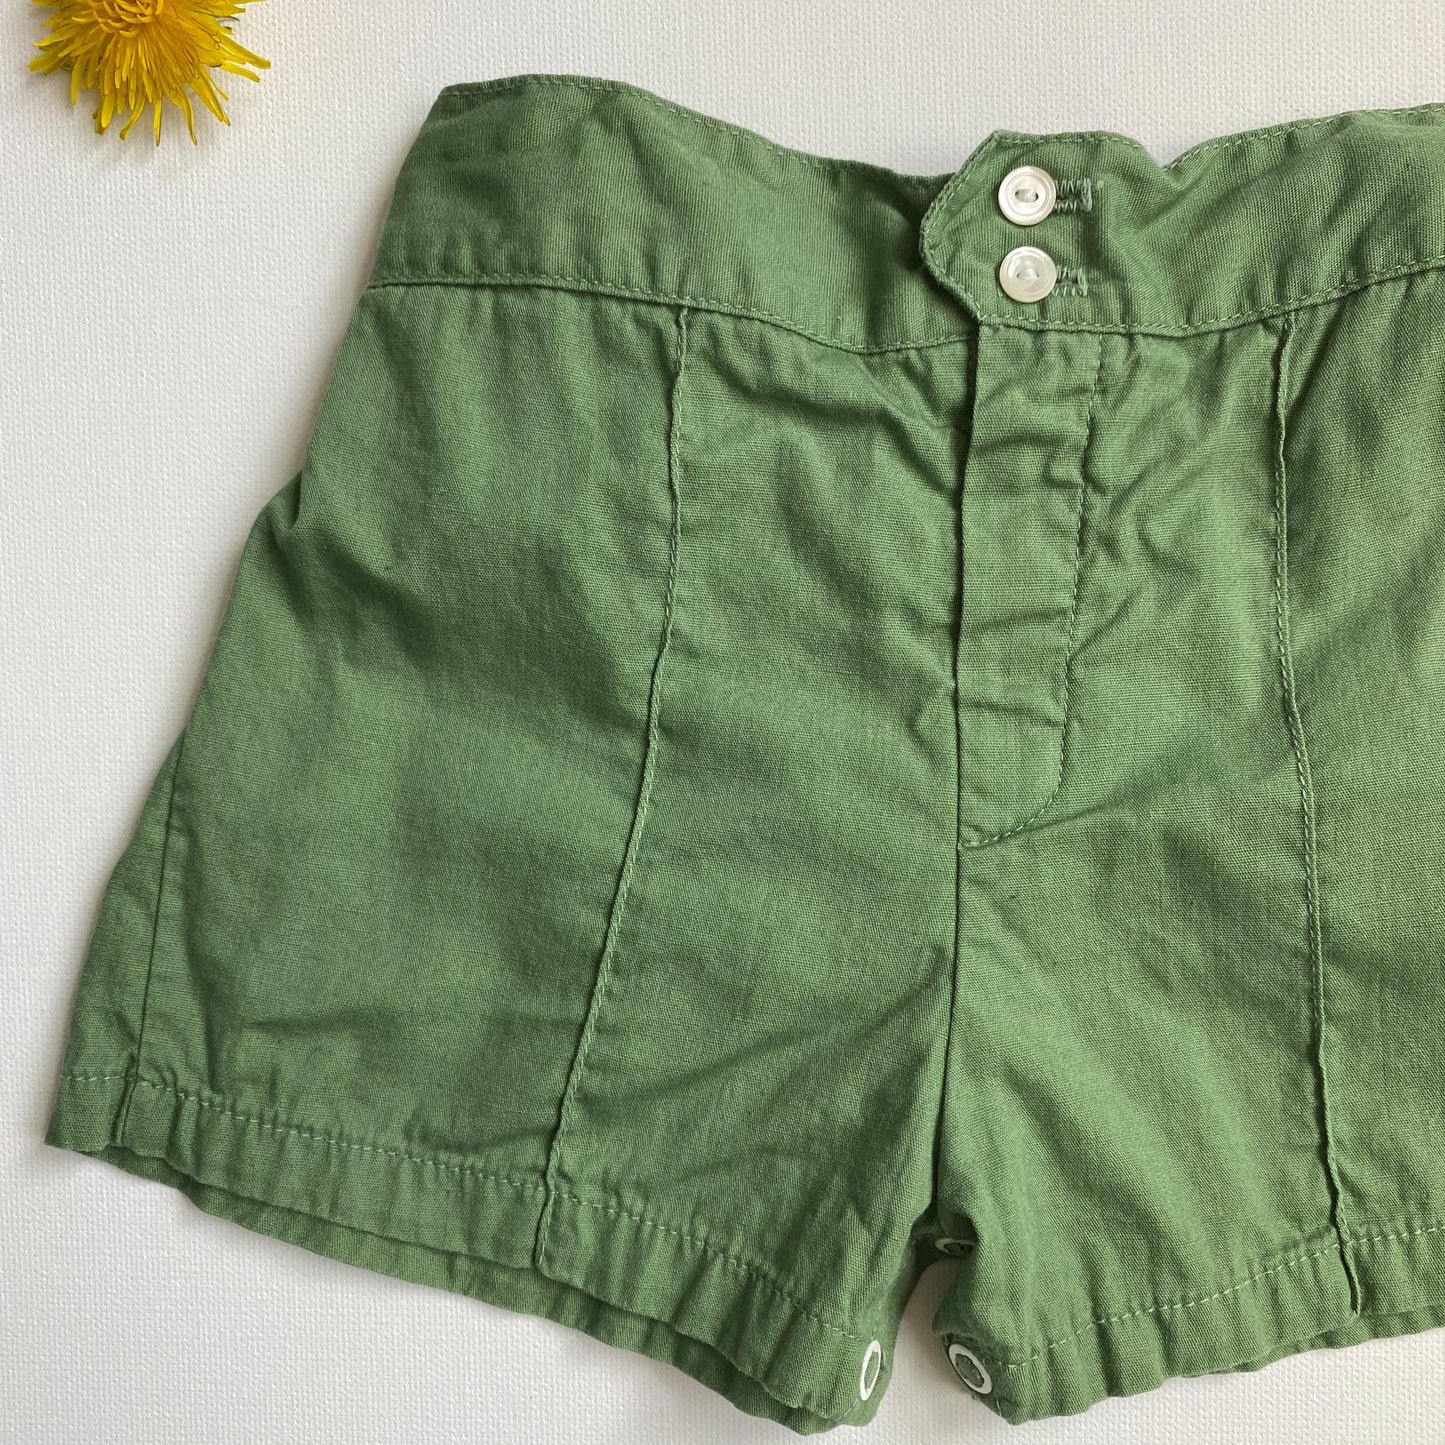 Vintage Green "Boyscout" Style Shorts 6-12M